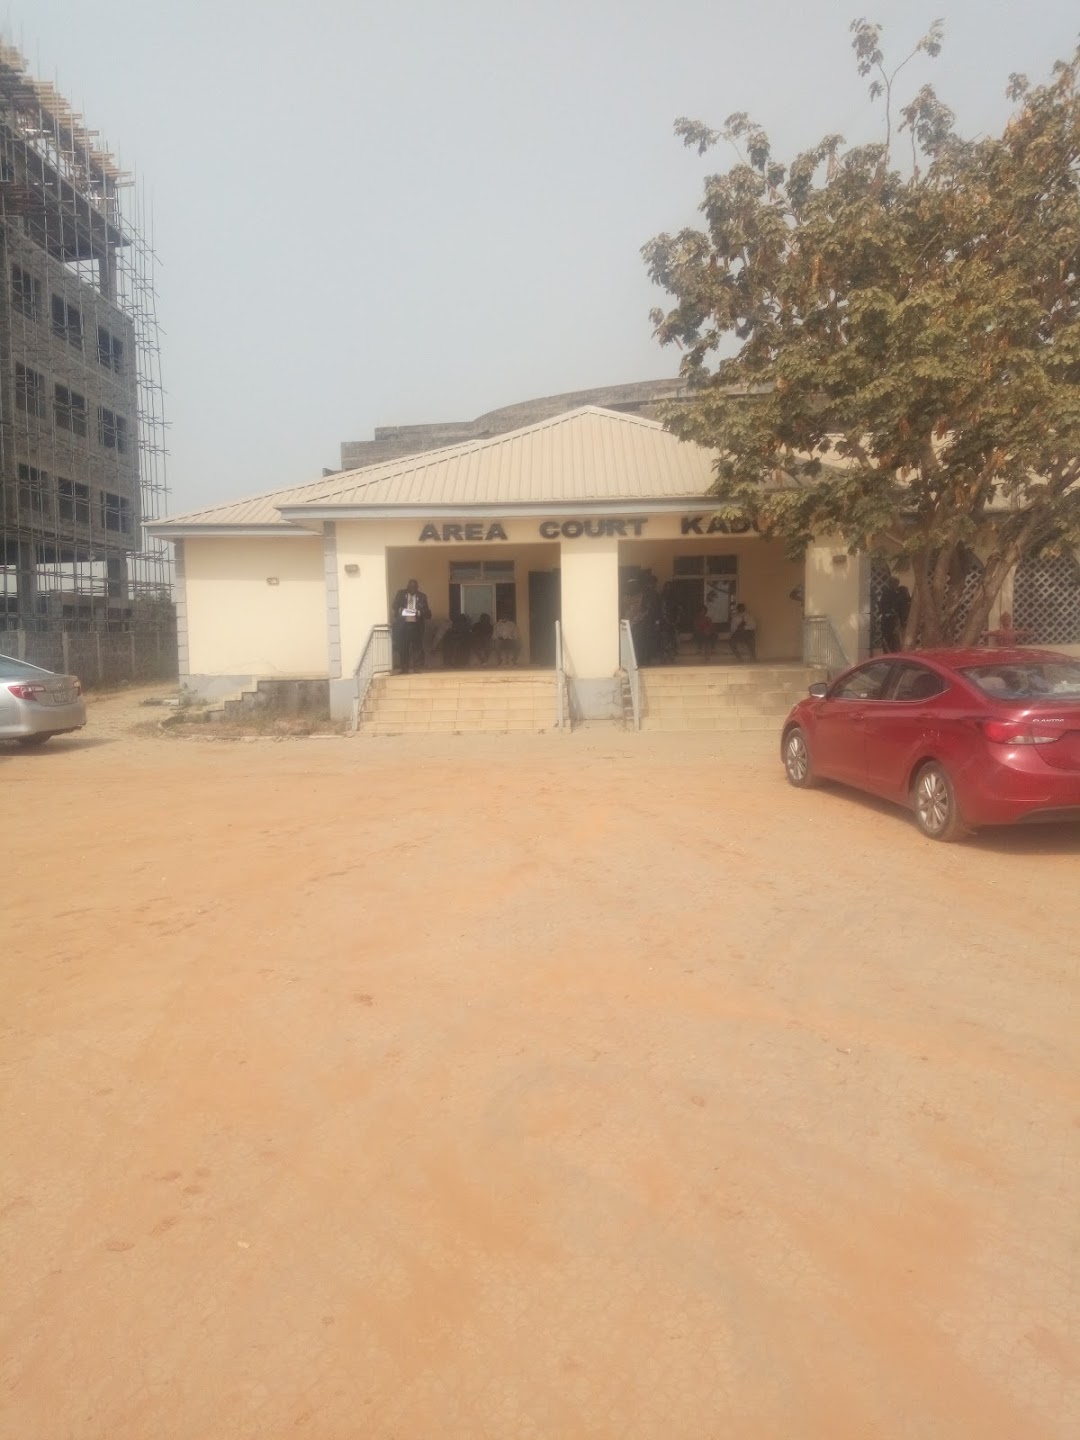 Upper & Grade 1 Area Court Kado (Garki) Abuja